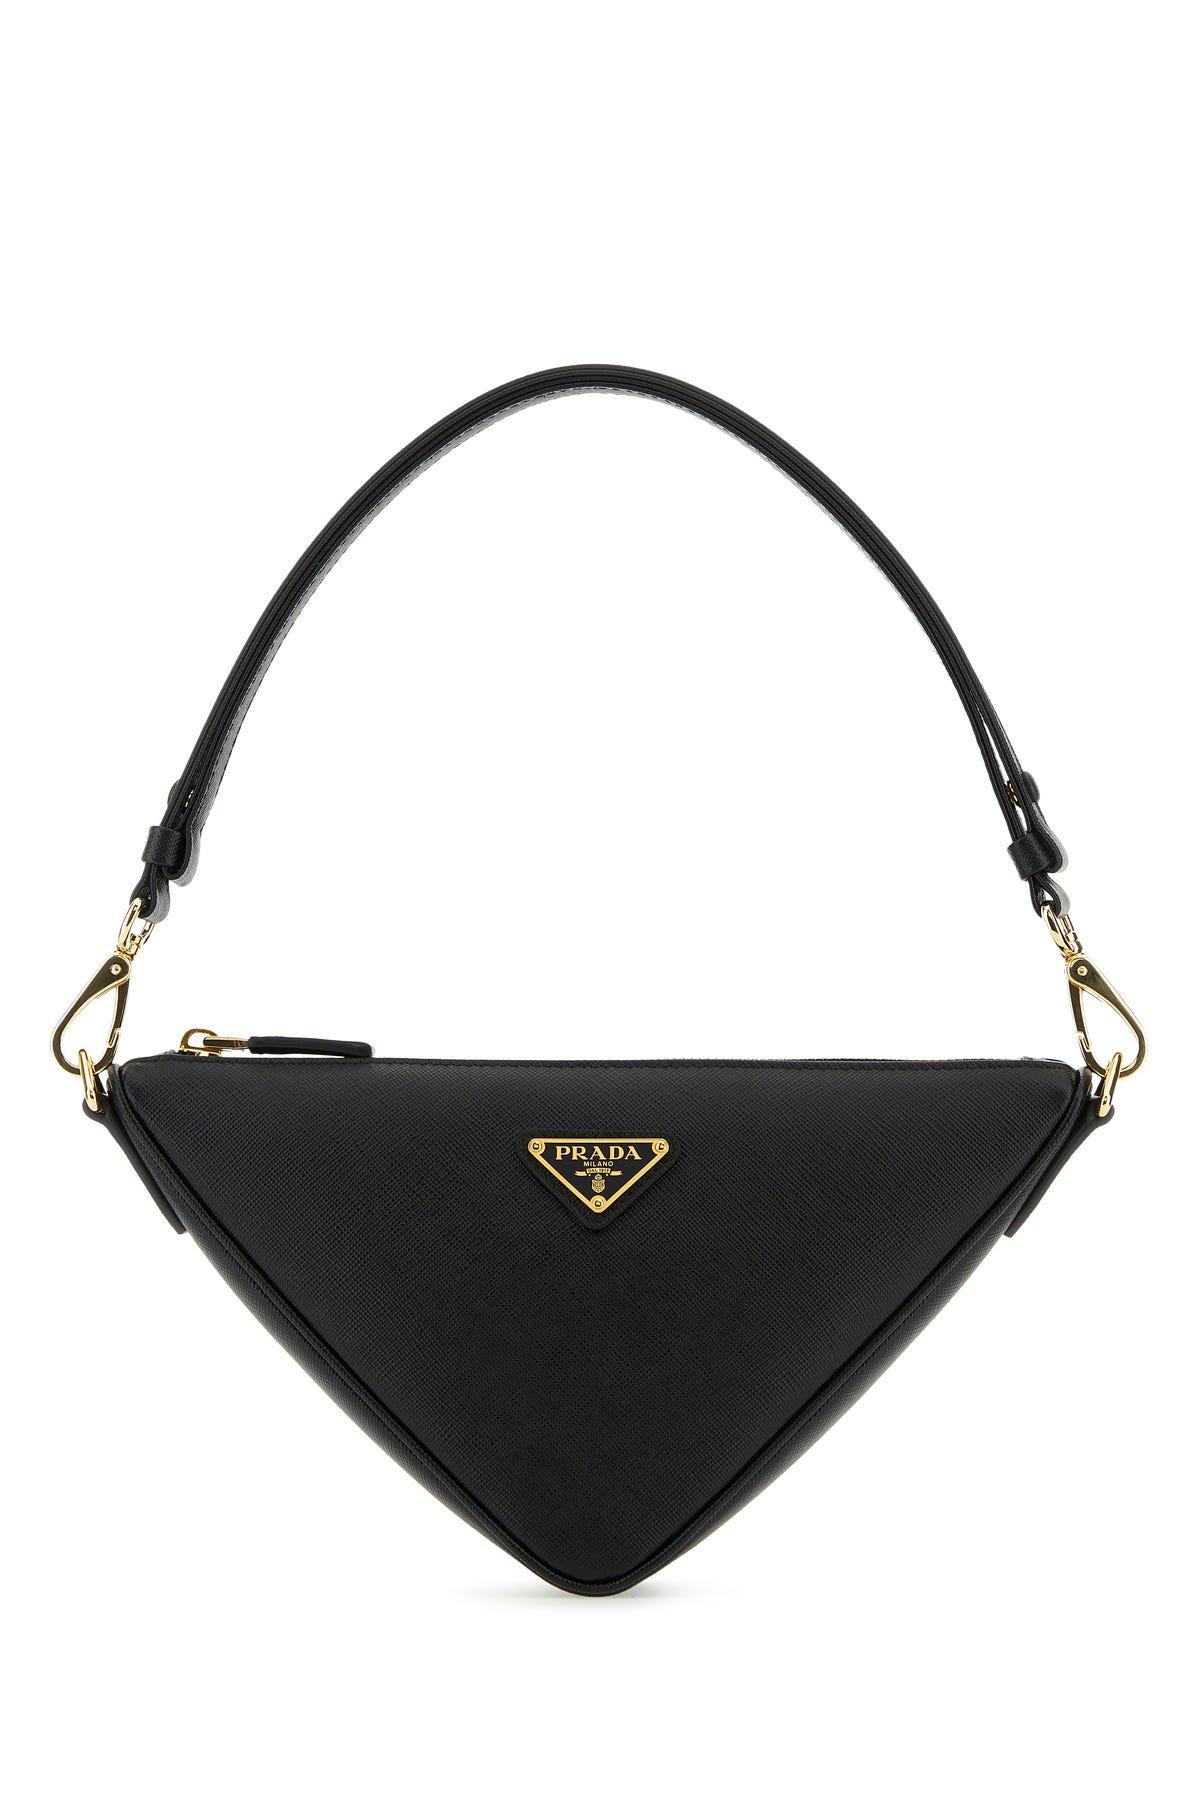 Triangle Saffiano Leather Shoulder Bag in Black - Prada